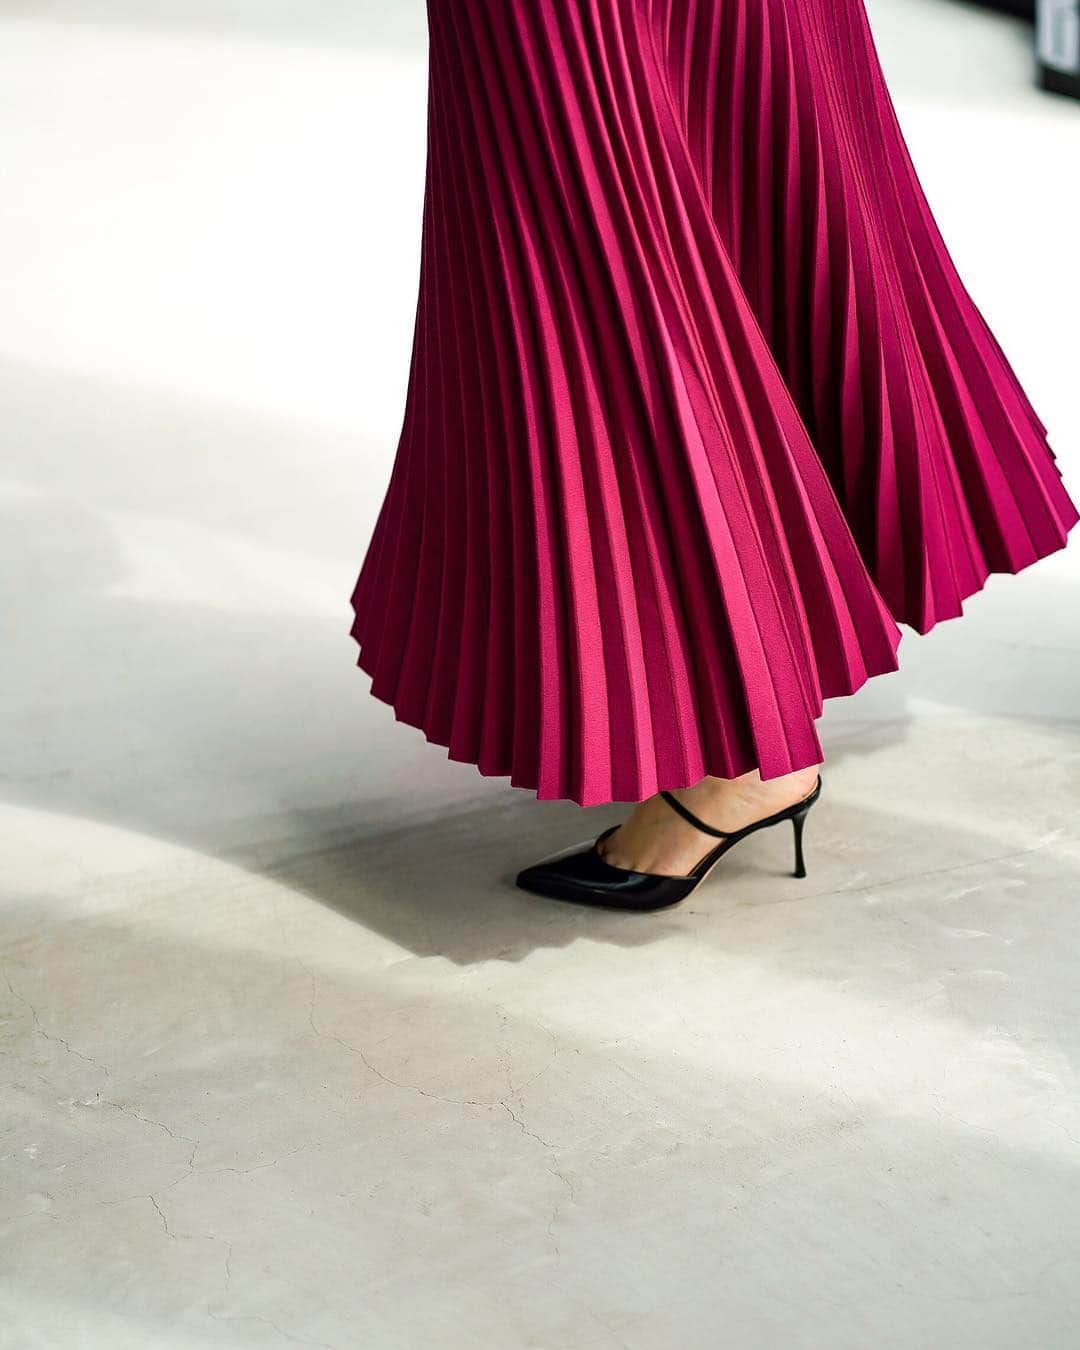 VERMEIL par ienaさんのインスタグラム写真 - (VERMEIL par ienaInstagram)「『大胆に色で遊ぶ。プリーツスカートも、ニット素材が新鮮。』 ﻿﻿﻿﻿﻿﻿﻿﻿﻿﻿﻿﻿﻿﻿﻿﻿﻿﻿﻿﻿﻿﻿﻿﻿﻿﻿﻿﻿﻿﻿﻿﻿﻿﻿﻿﻿﻿﻿﻿﻿﻿ ﻿﻿﻿﻿﻿﻿﻿﻿﻿﻿﻿﻿﻿﻿﻿﻿﻿﻿﻿﻿﻿﻿﻿﻿﻿﻿﻿﻿﻿﻿﻿﻿﻿﻿﻿﻿ ﻿﻿﻿﻿﻿﻿﻿﻿ ﻿ ﻿ ﻿﻿ Blouse: 32,000yen+tax / LUNE @lunetokyo  Skirt: 26,000yen+tax / VERMEIL par iena﻿﻿﻿﻿﻿﻿﻿﻿ Shoes: 73,000yen+tax / Sergio Rossi﻿ ﻿﻿﻿﻿ @sergiorossi  ㅤㅤㅤㅤㅤㅤㅤㅤㅤㅤㅤㅤ﻿﻿﻿﻿﻿﻿﻿﻿﻿ ㅤㅤㅤㅤ﻿ㅤㅤㅤㅤㅤㅤㅤㅤㅤ﻿﻿﻿﻿﻿﻿﻿﻿﻿﻿﻿﻿﻿﻿﻿﻿﻿﻿﻿﻿﻿﻿﻿﻿﻿﻿﻿﻿﻿﻿﻿﻿﻿﻿﻿﻿ #vermeilpariena #iena ﻿﻿﻿﻿﻿﻿﻿﻿﻿﻿﻿﻿﻿﻿﻿﻿﻿﻿﻿﻿﻿﻿﻿﻿﻿﻿﻿﻿﻿﻿﻿﻿﻿﻿﻿﻿﻿﻿﻿﻿﻿ #2019ss #newin﻿﻿﻿﻿ ﻿﻿﻿﻿﻿﻿ #ヴェルメイユパーイエナ #イエナ ﻿﻿﻿﻿﻿﻿﻿﻿﻿﻿﻿﻿﻿﻿﻿﻿﻿﻿﻿﻿﻿﻿﻿﻿﻿﻿﻿﻿﻿﻿﻿﻿﻿﻿﻿﻿﻿﻿﻿﻿ #カラースカート #ニットスカート﻿ #新入荷﻿ ﻿﻿#プリーツスカート﻿ ﻿﻿﻿﻿」3月25日 22時24分 - vermeilpariena